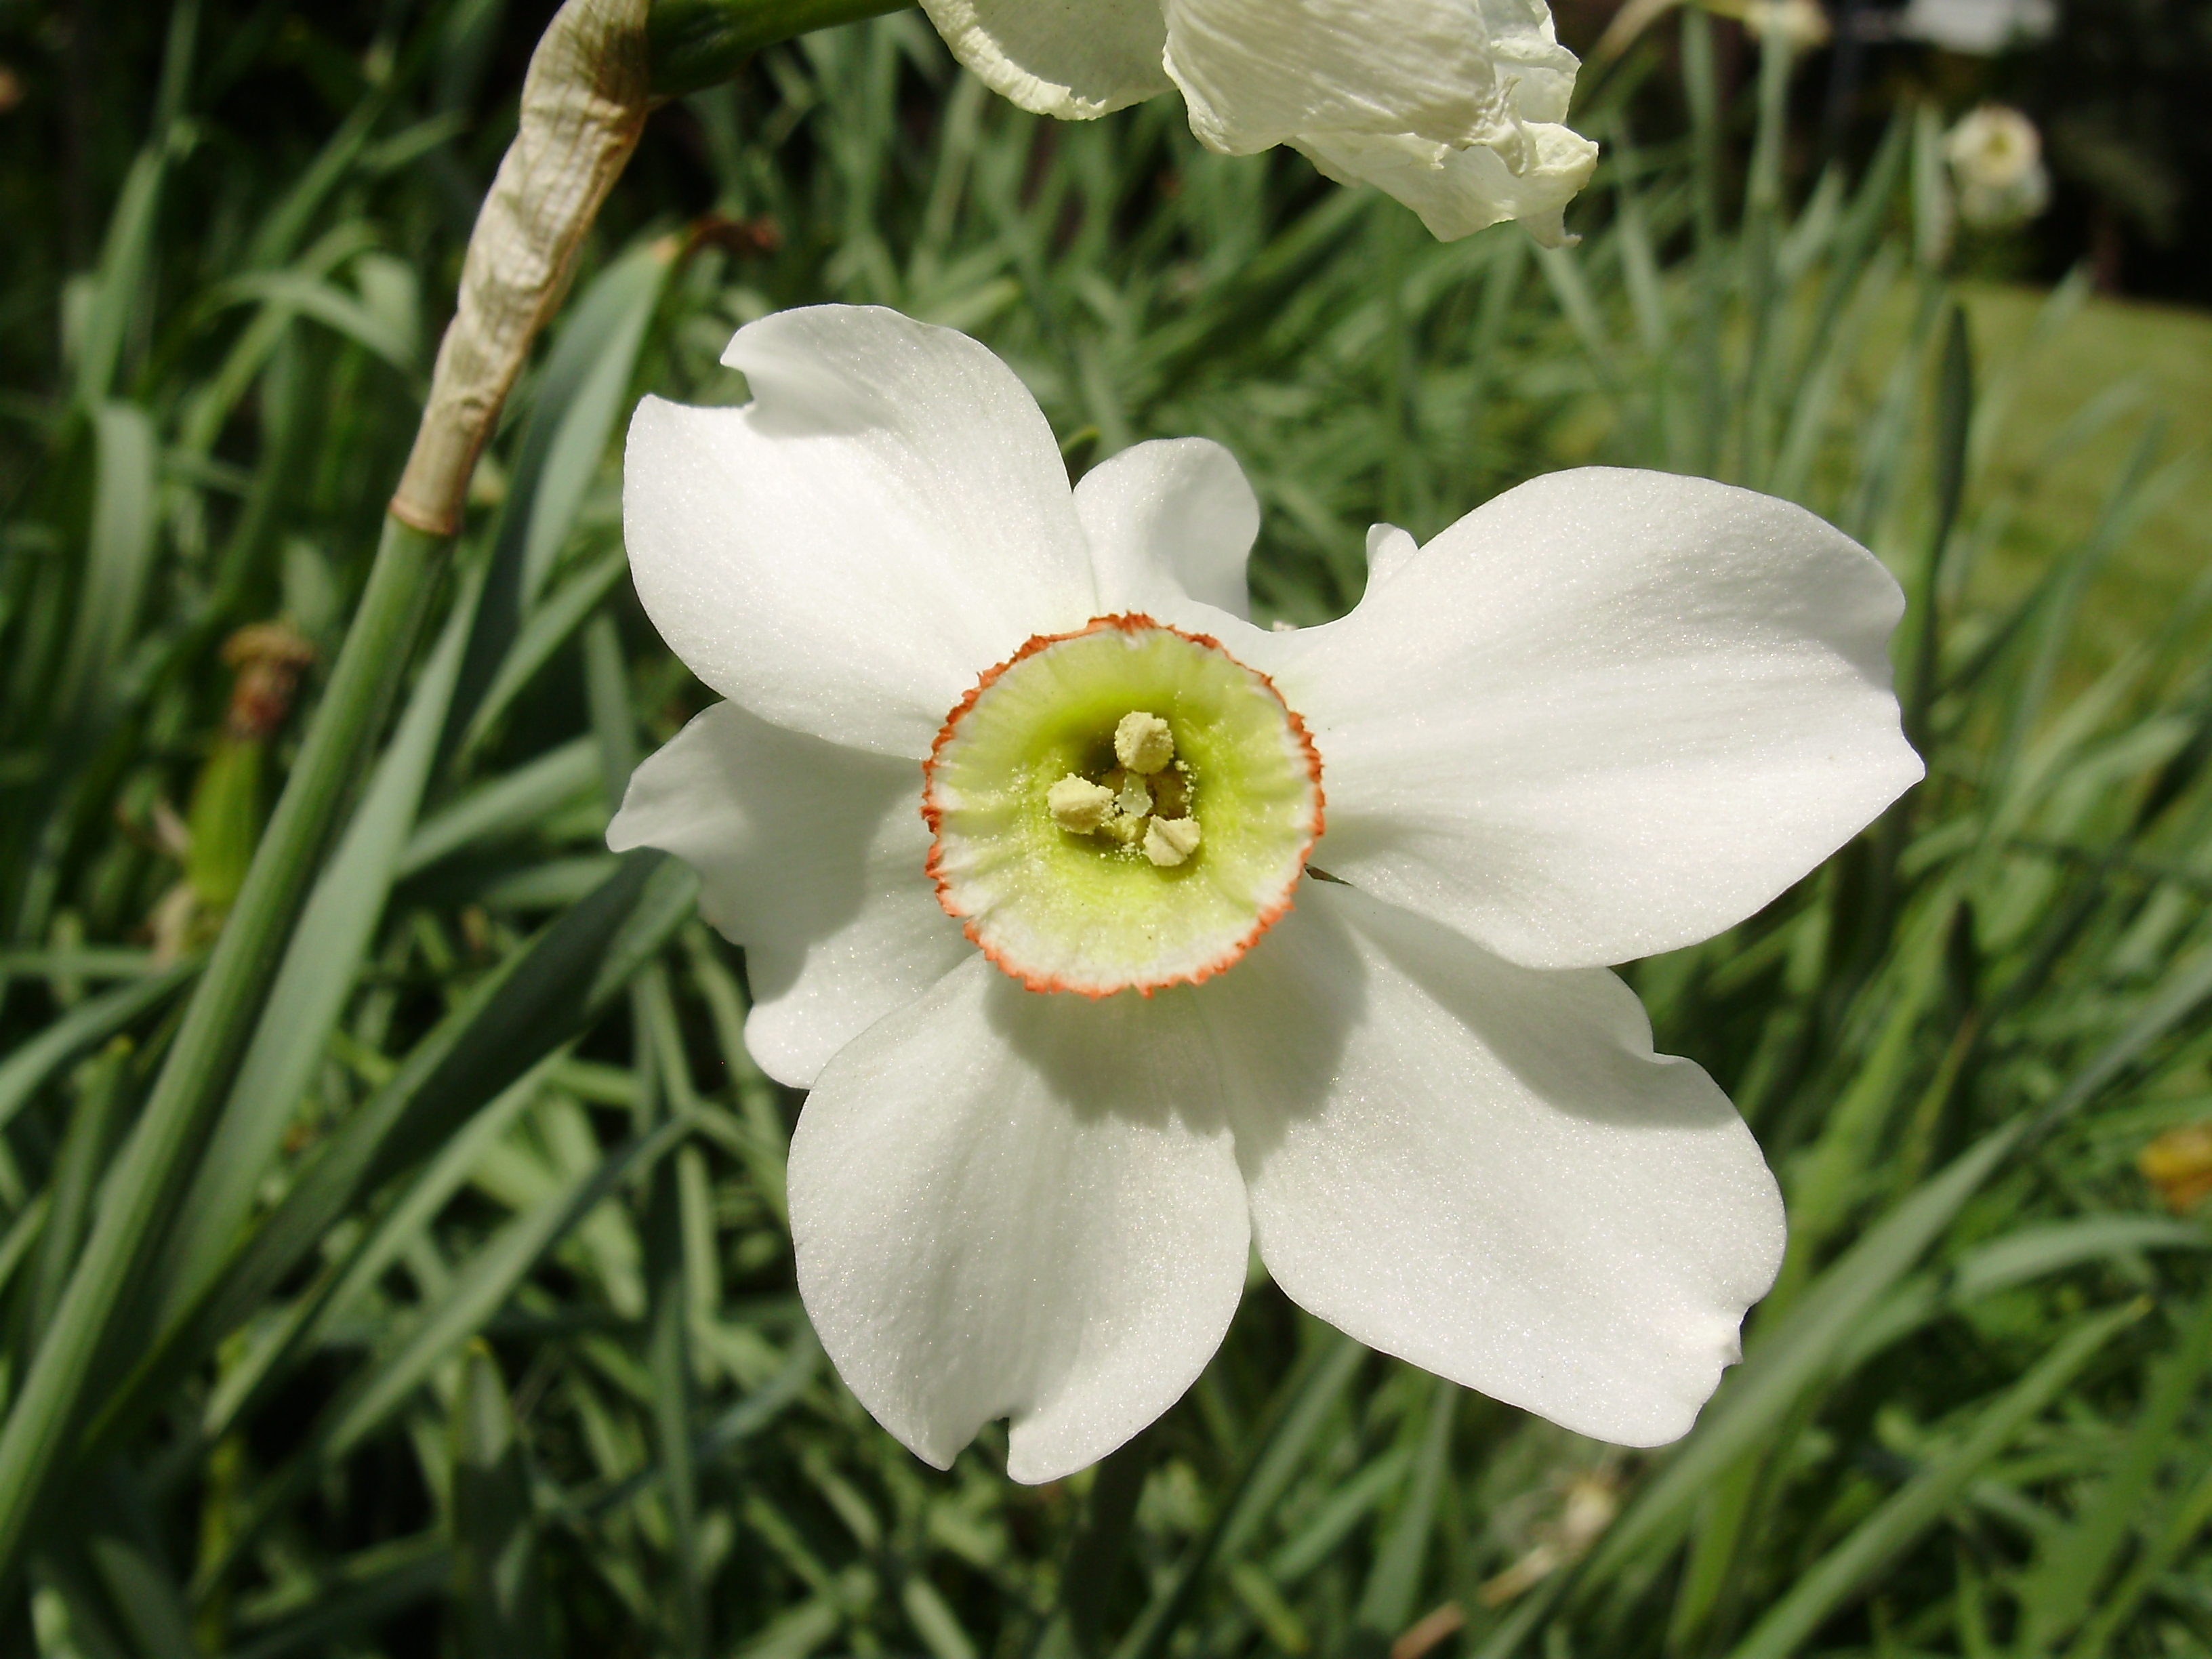 datei:narcissus flower – wikipedia